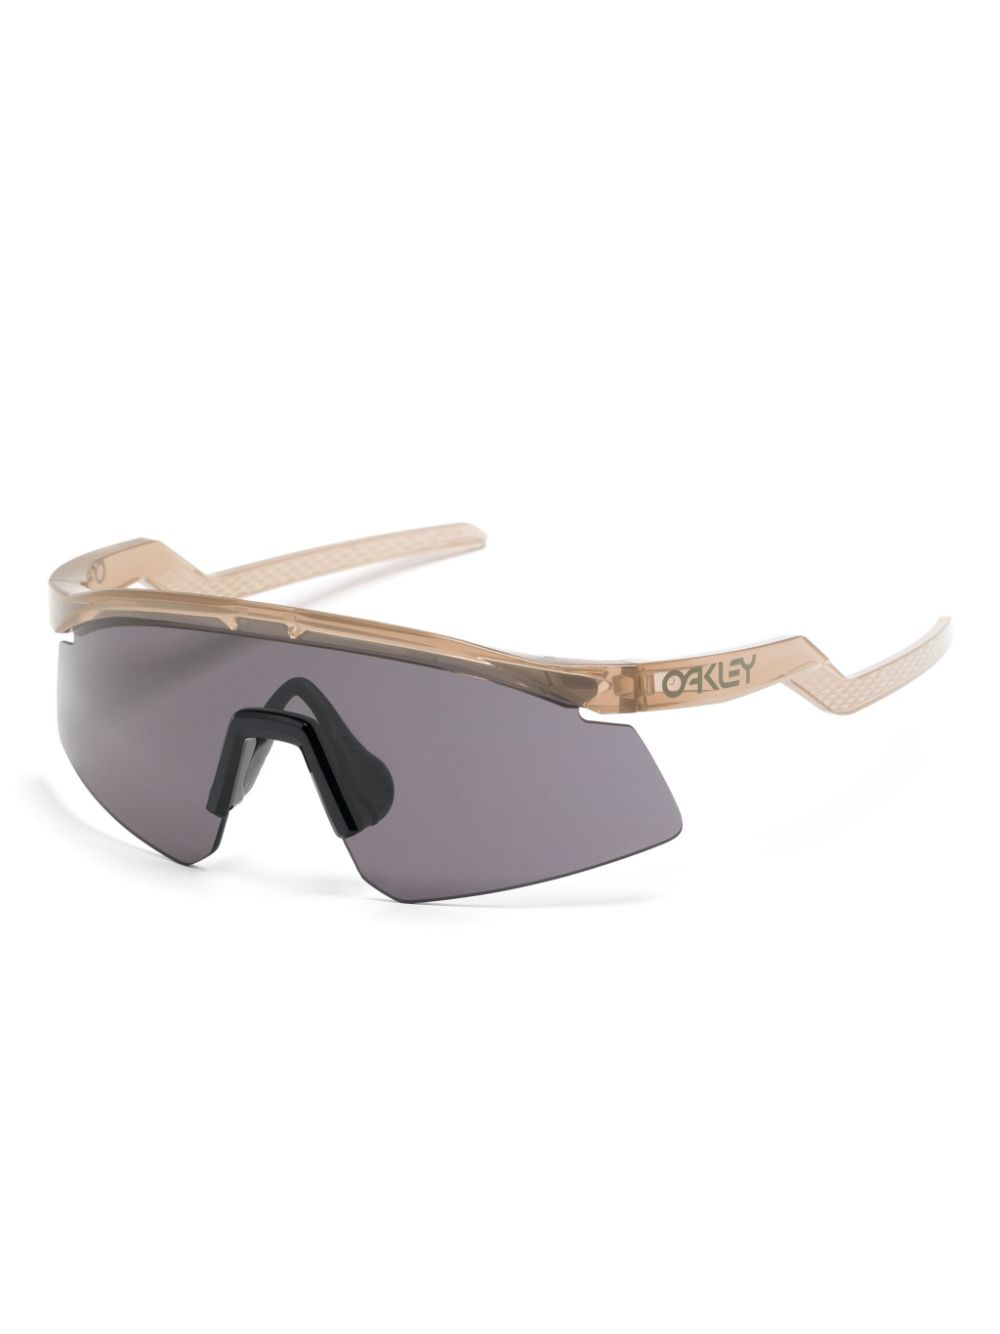 Hydra shield-frame sunglasses<BR/><BR/><BR/>